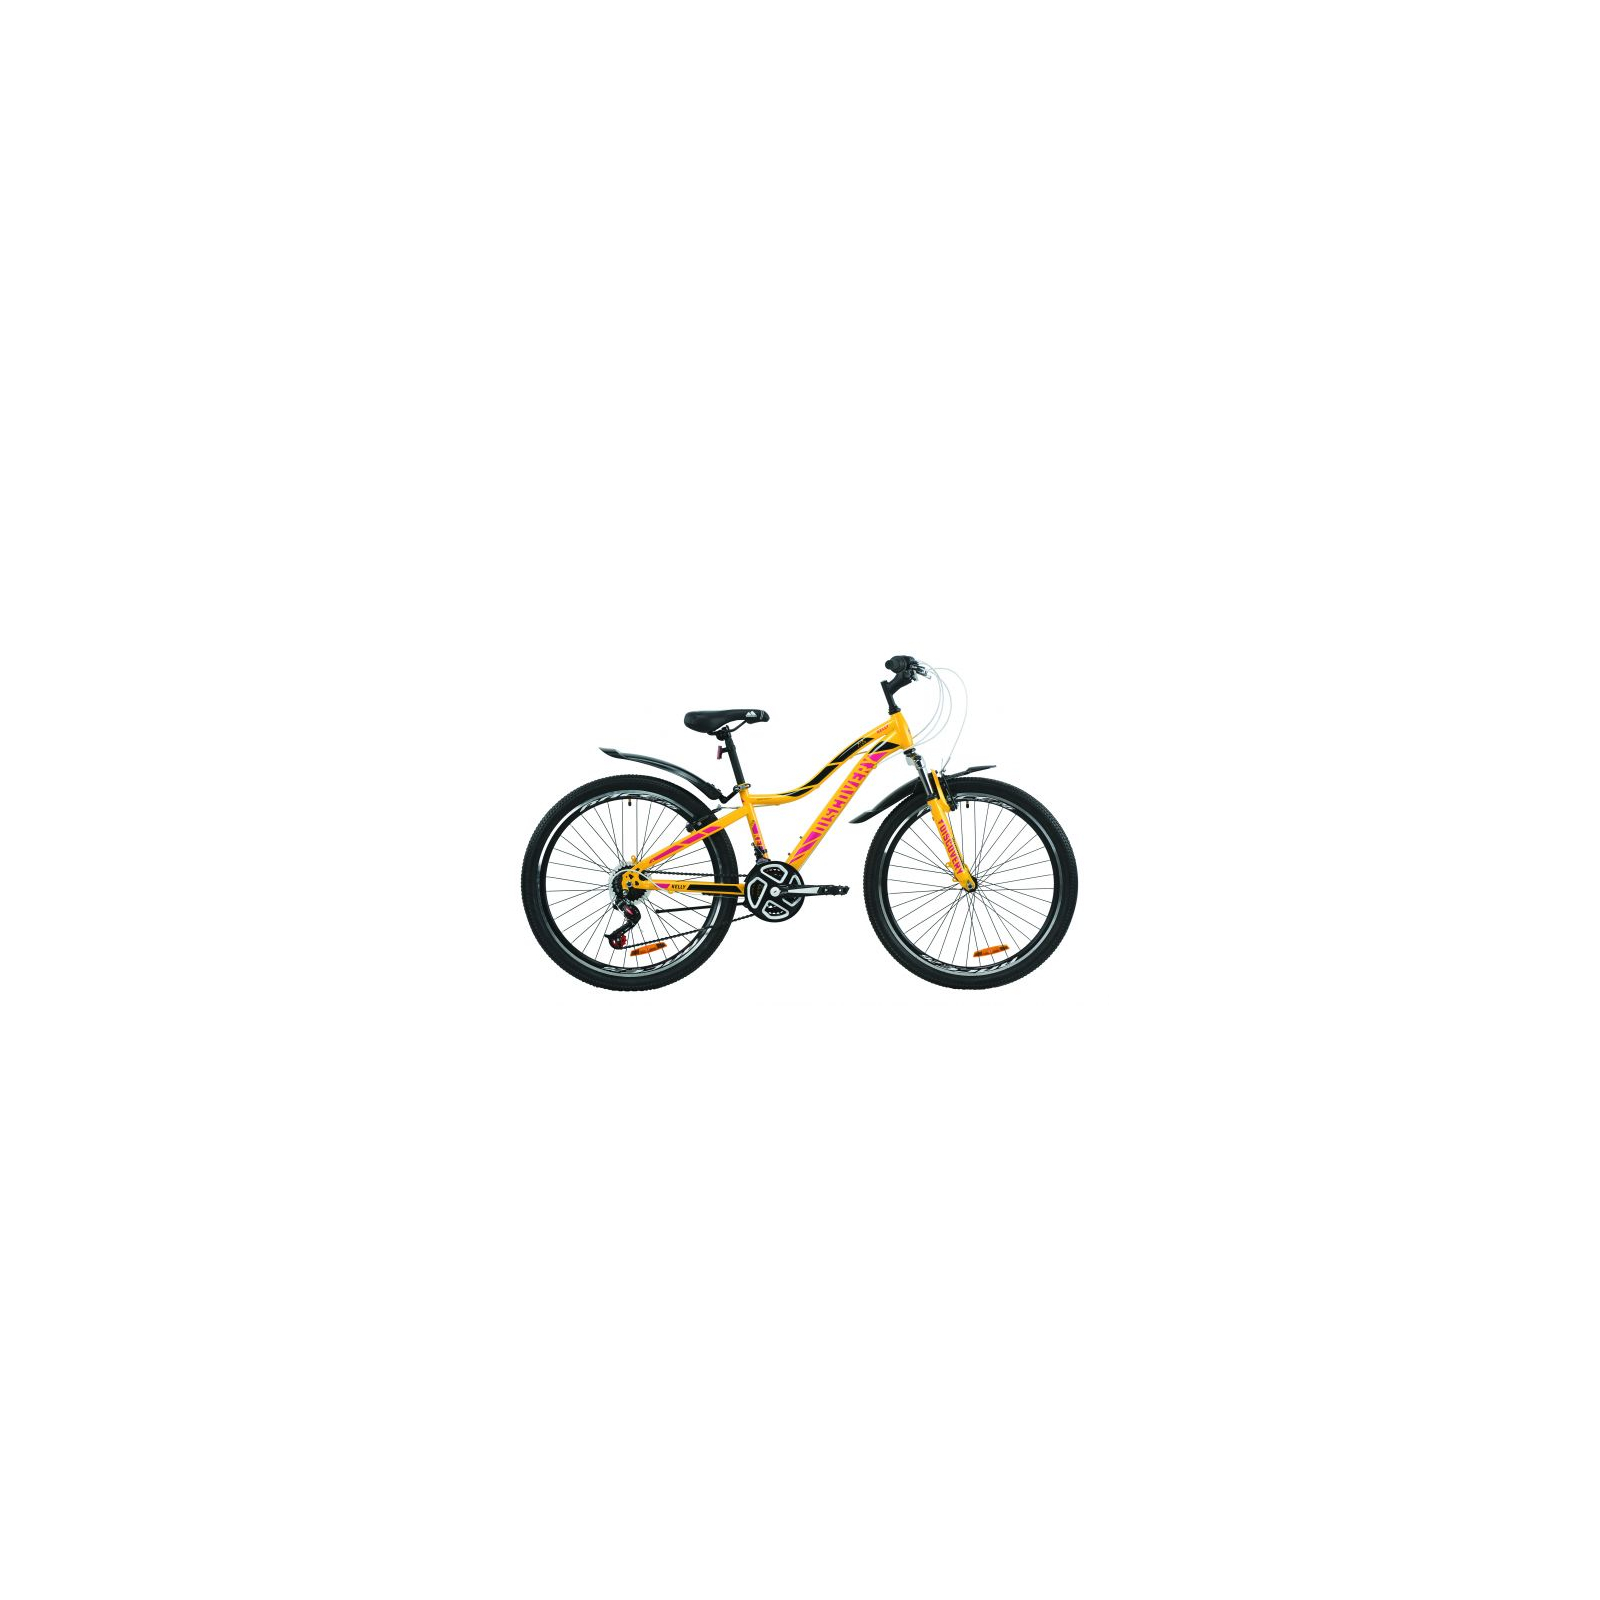 Велосипед Discovery 26" KELLY AM Vbr рама-16" St 2020 желто-сиреневый с черным (OPS-DIS-26-254)